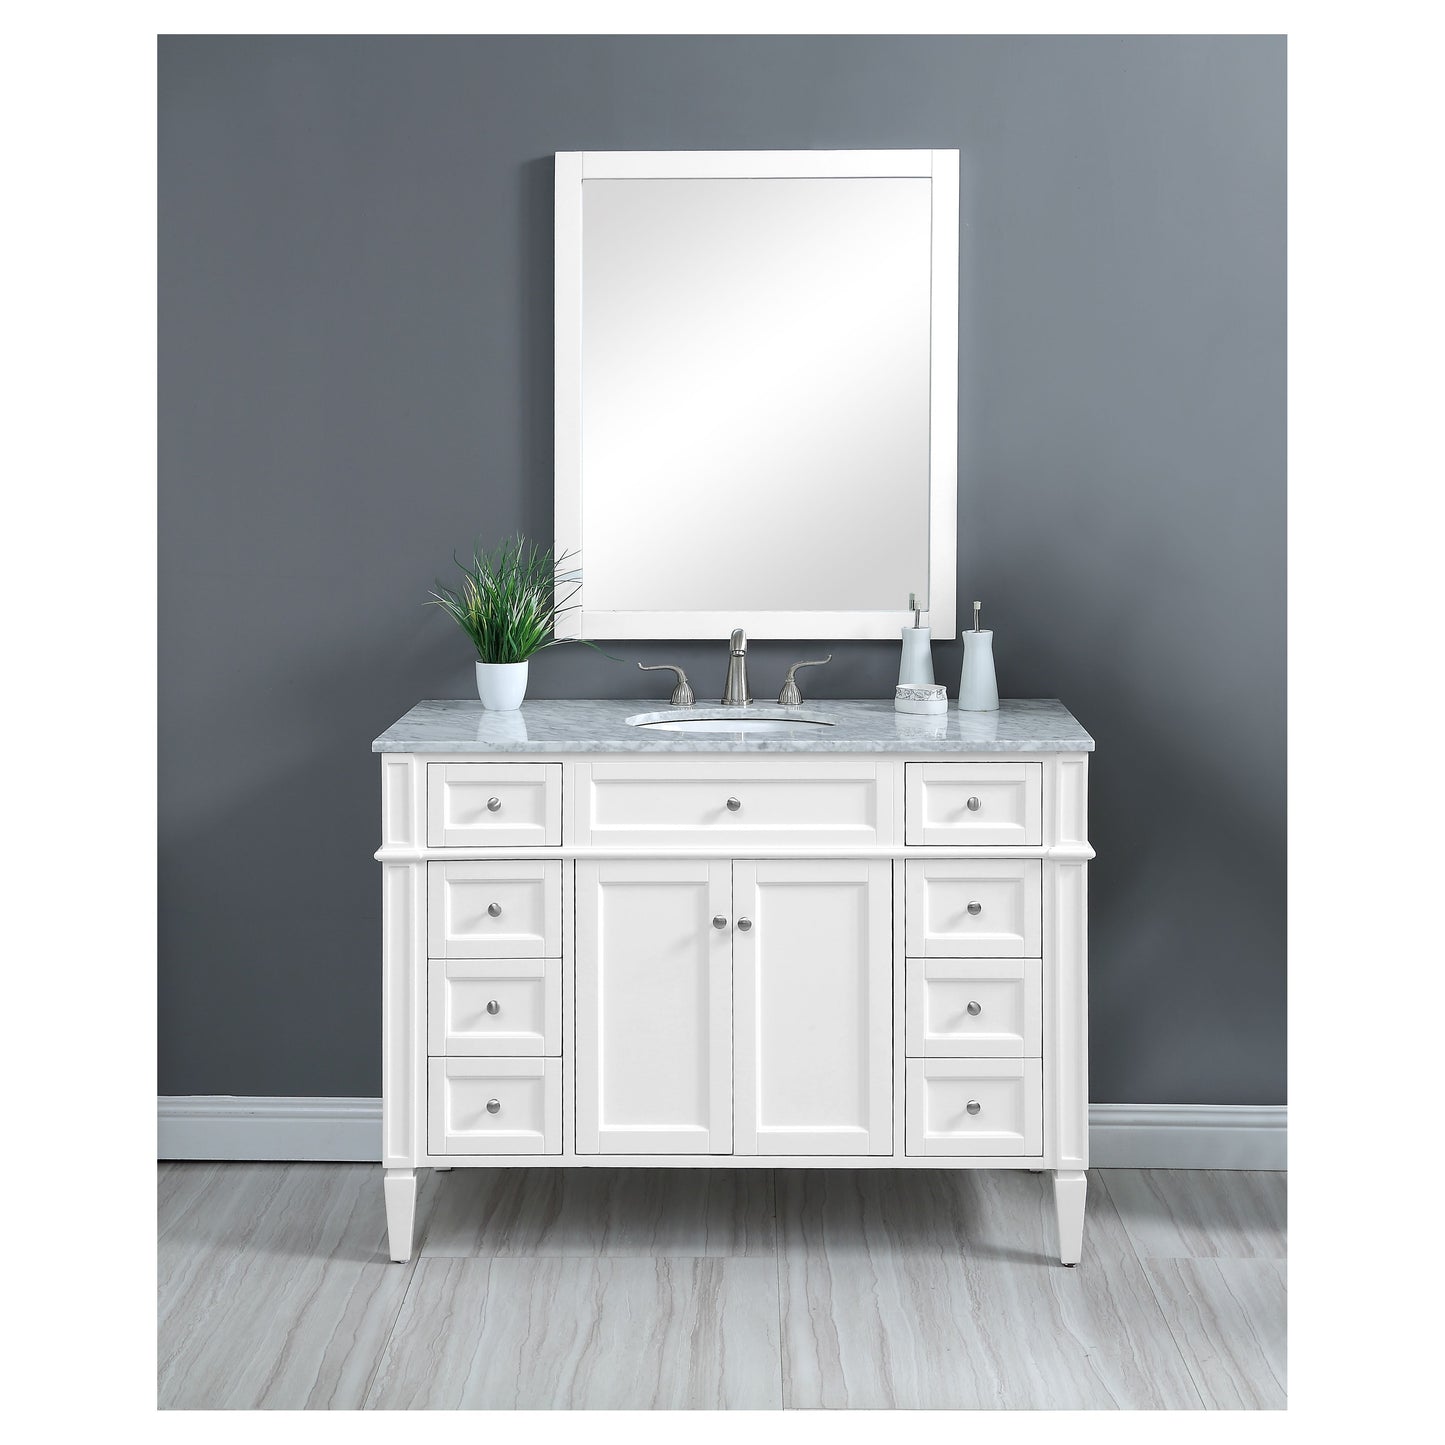 VF12548WH 48" Single Bathroom Vanity Set in White